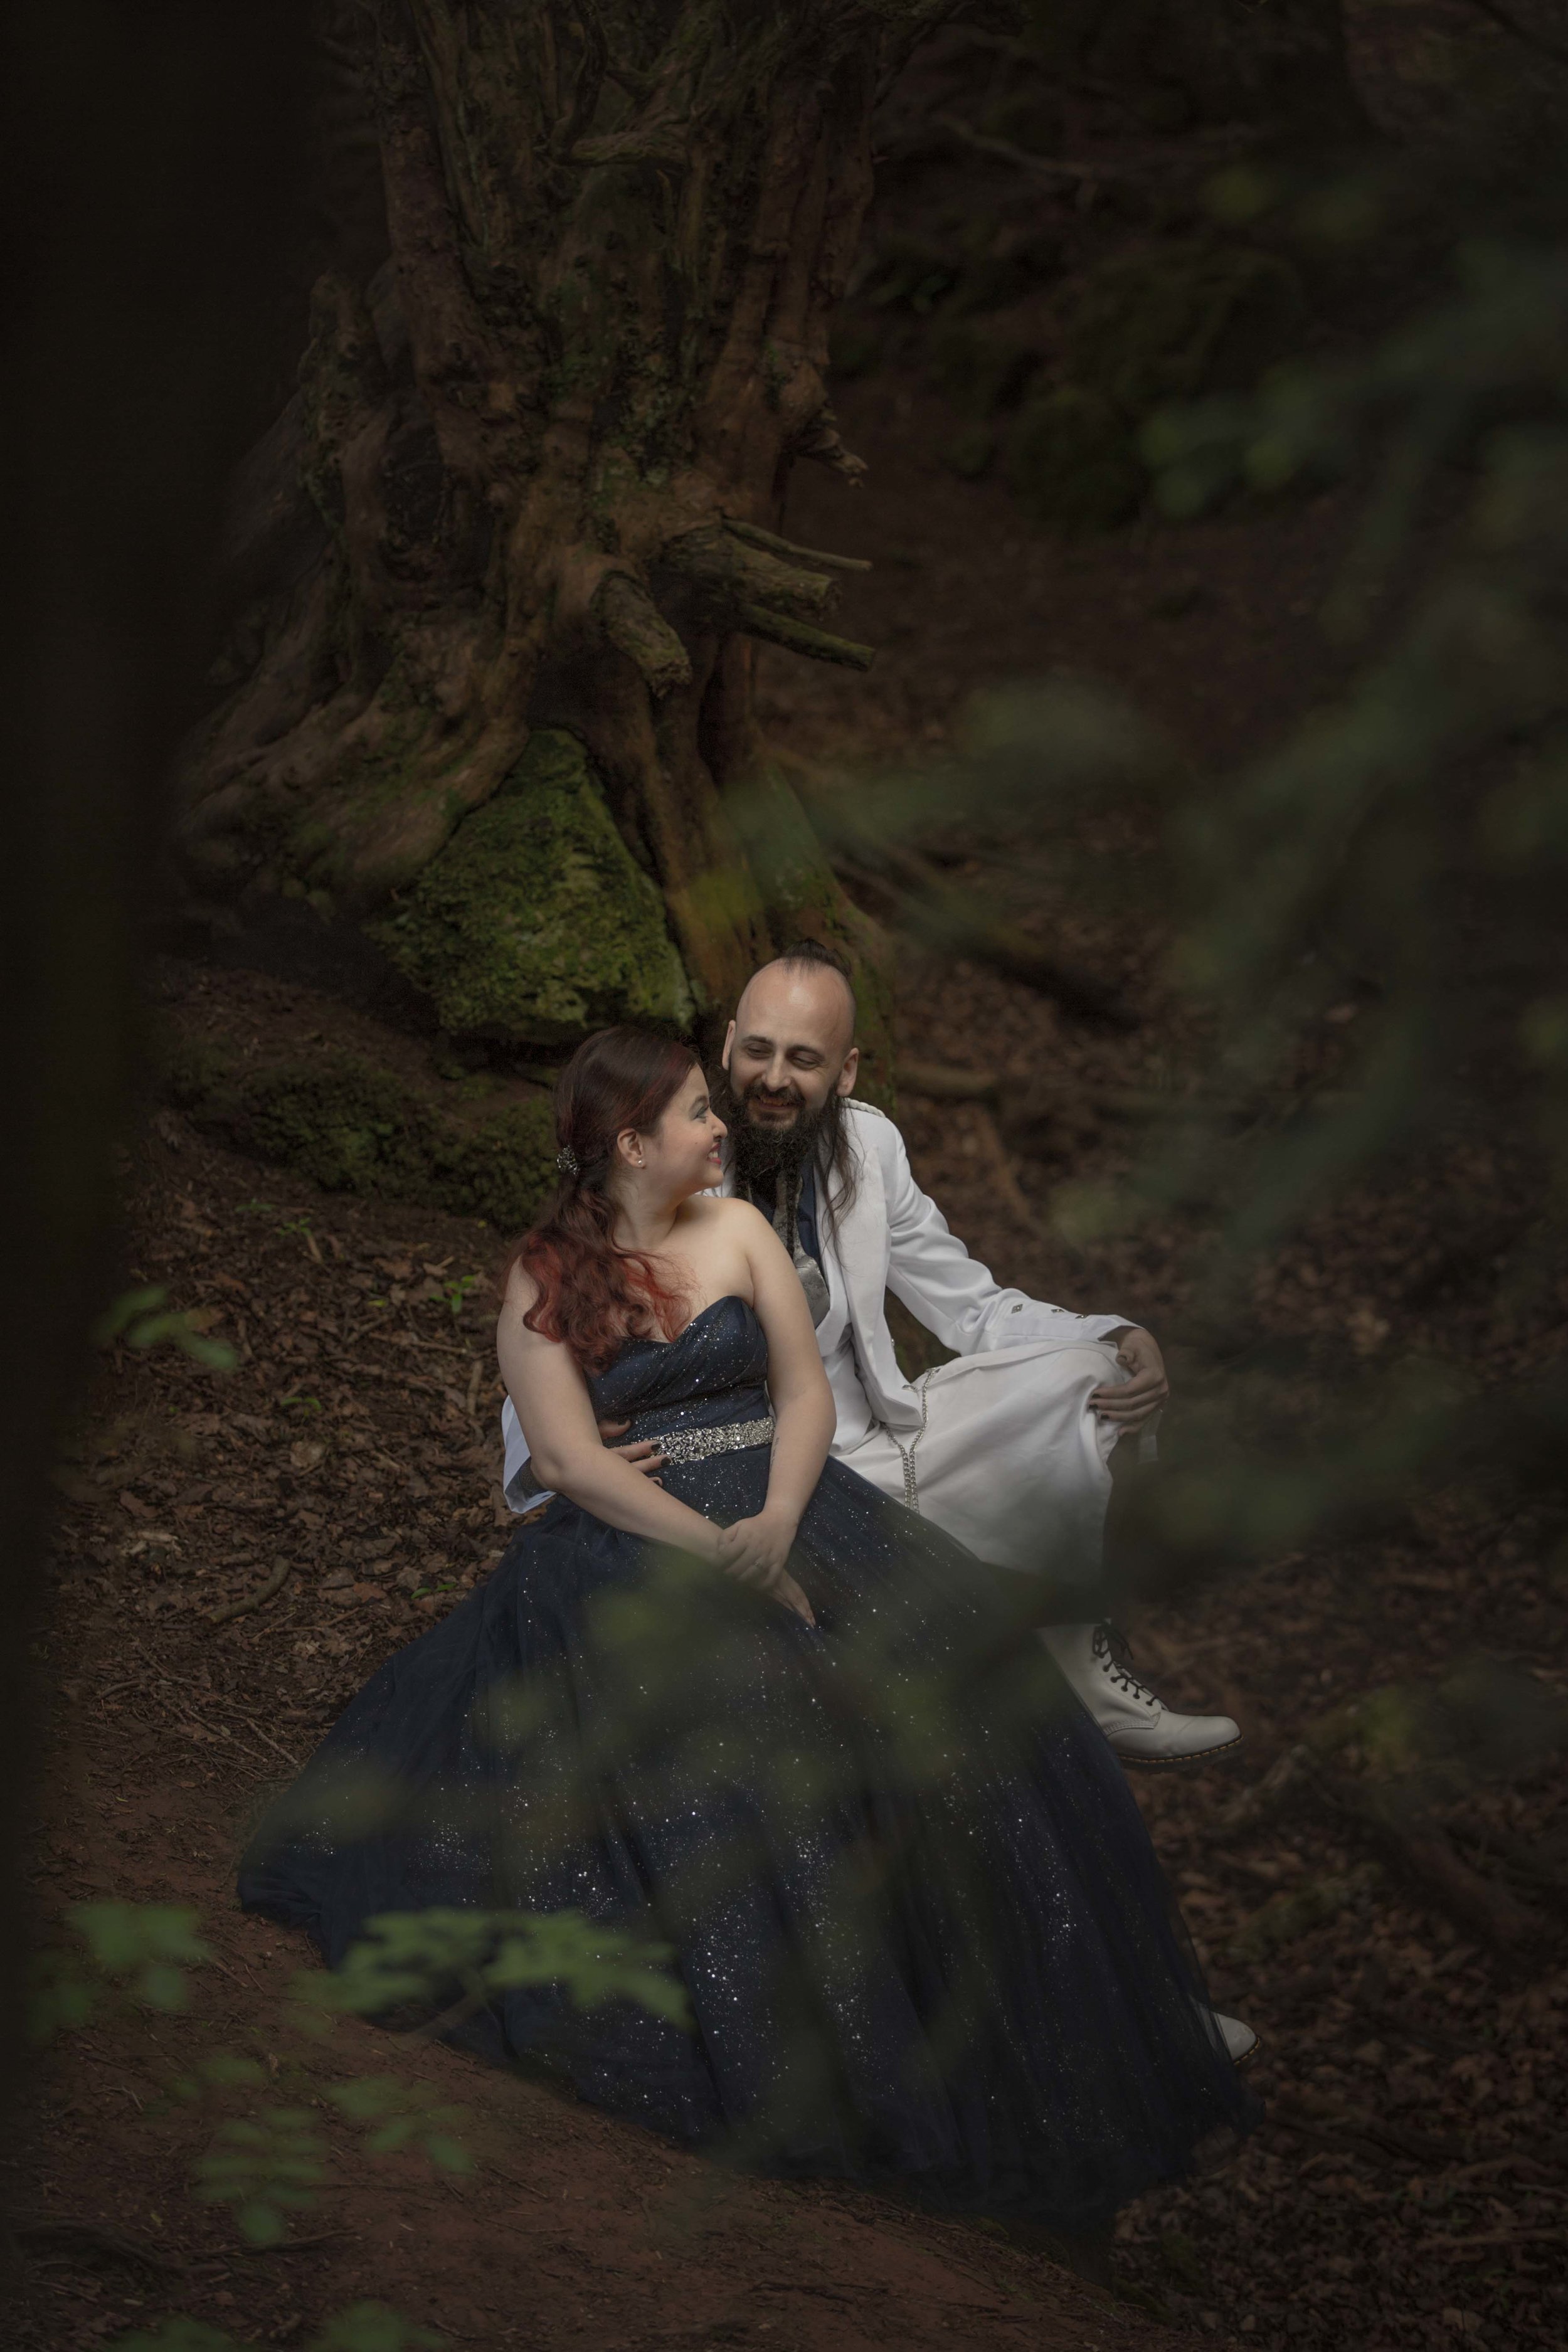 Puzzlewood-fairytale-fairy-forest-wood-prewedding-photoshoot-star-wars-couple-shoot-asian-wedding-photographer-natalia-smith-photography-12.jpg